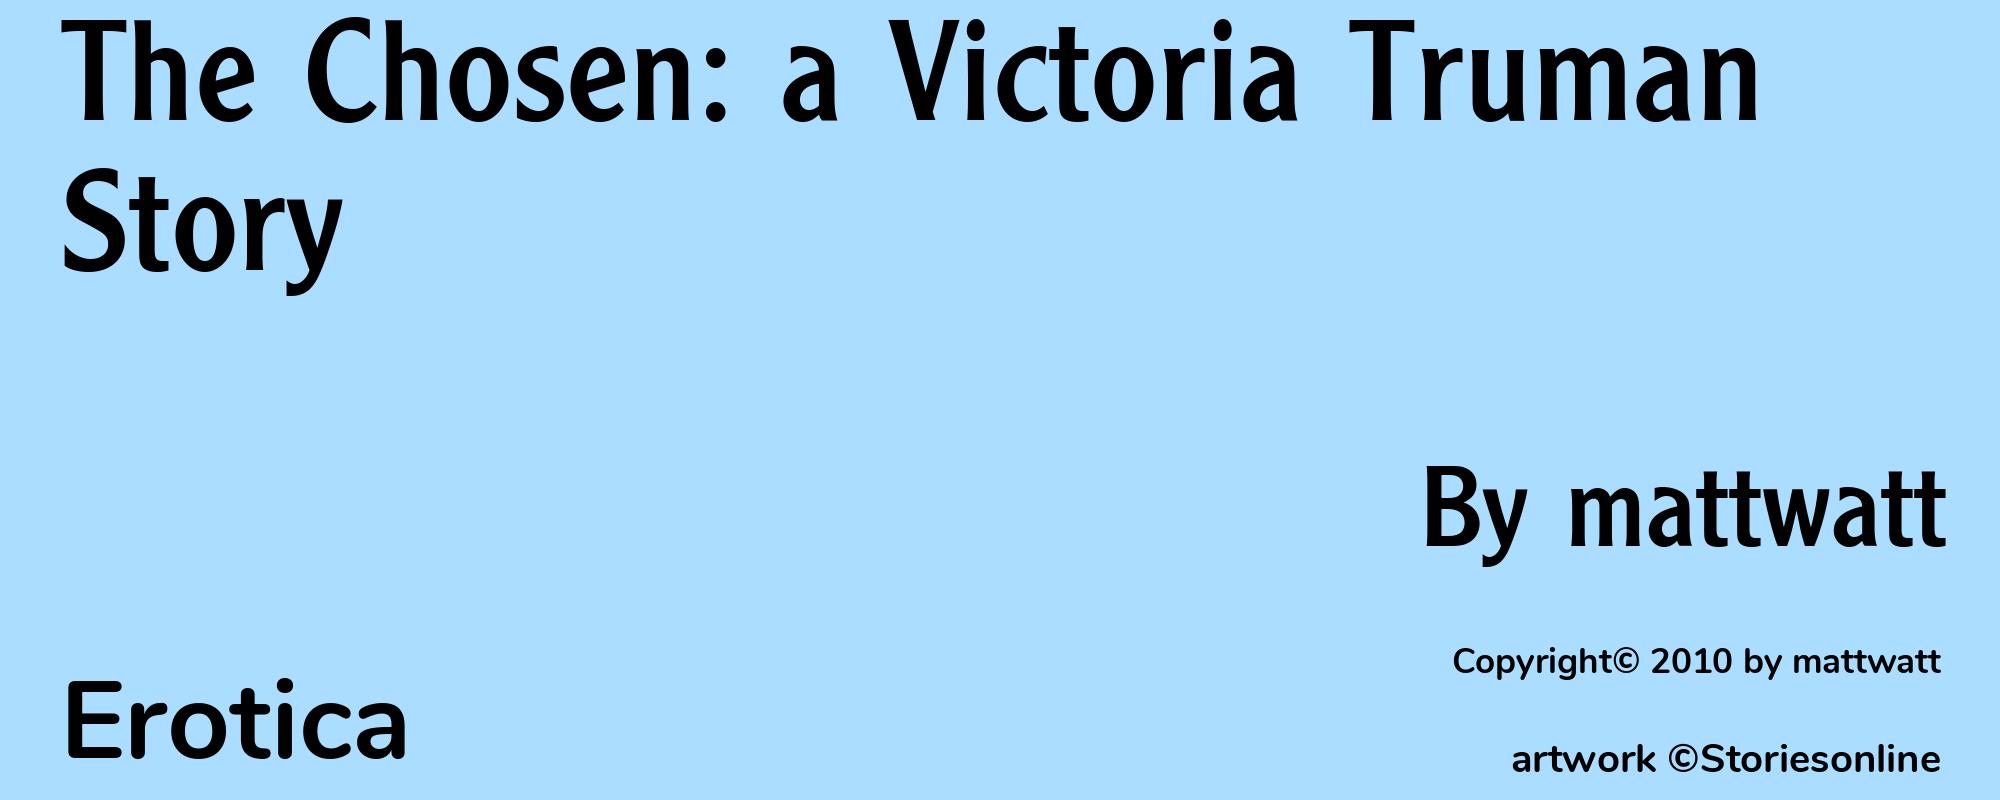 The Chosen: a Victoria Truman Story - Cover